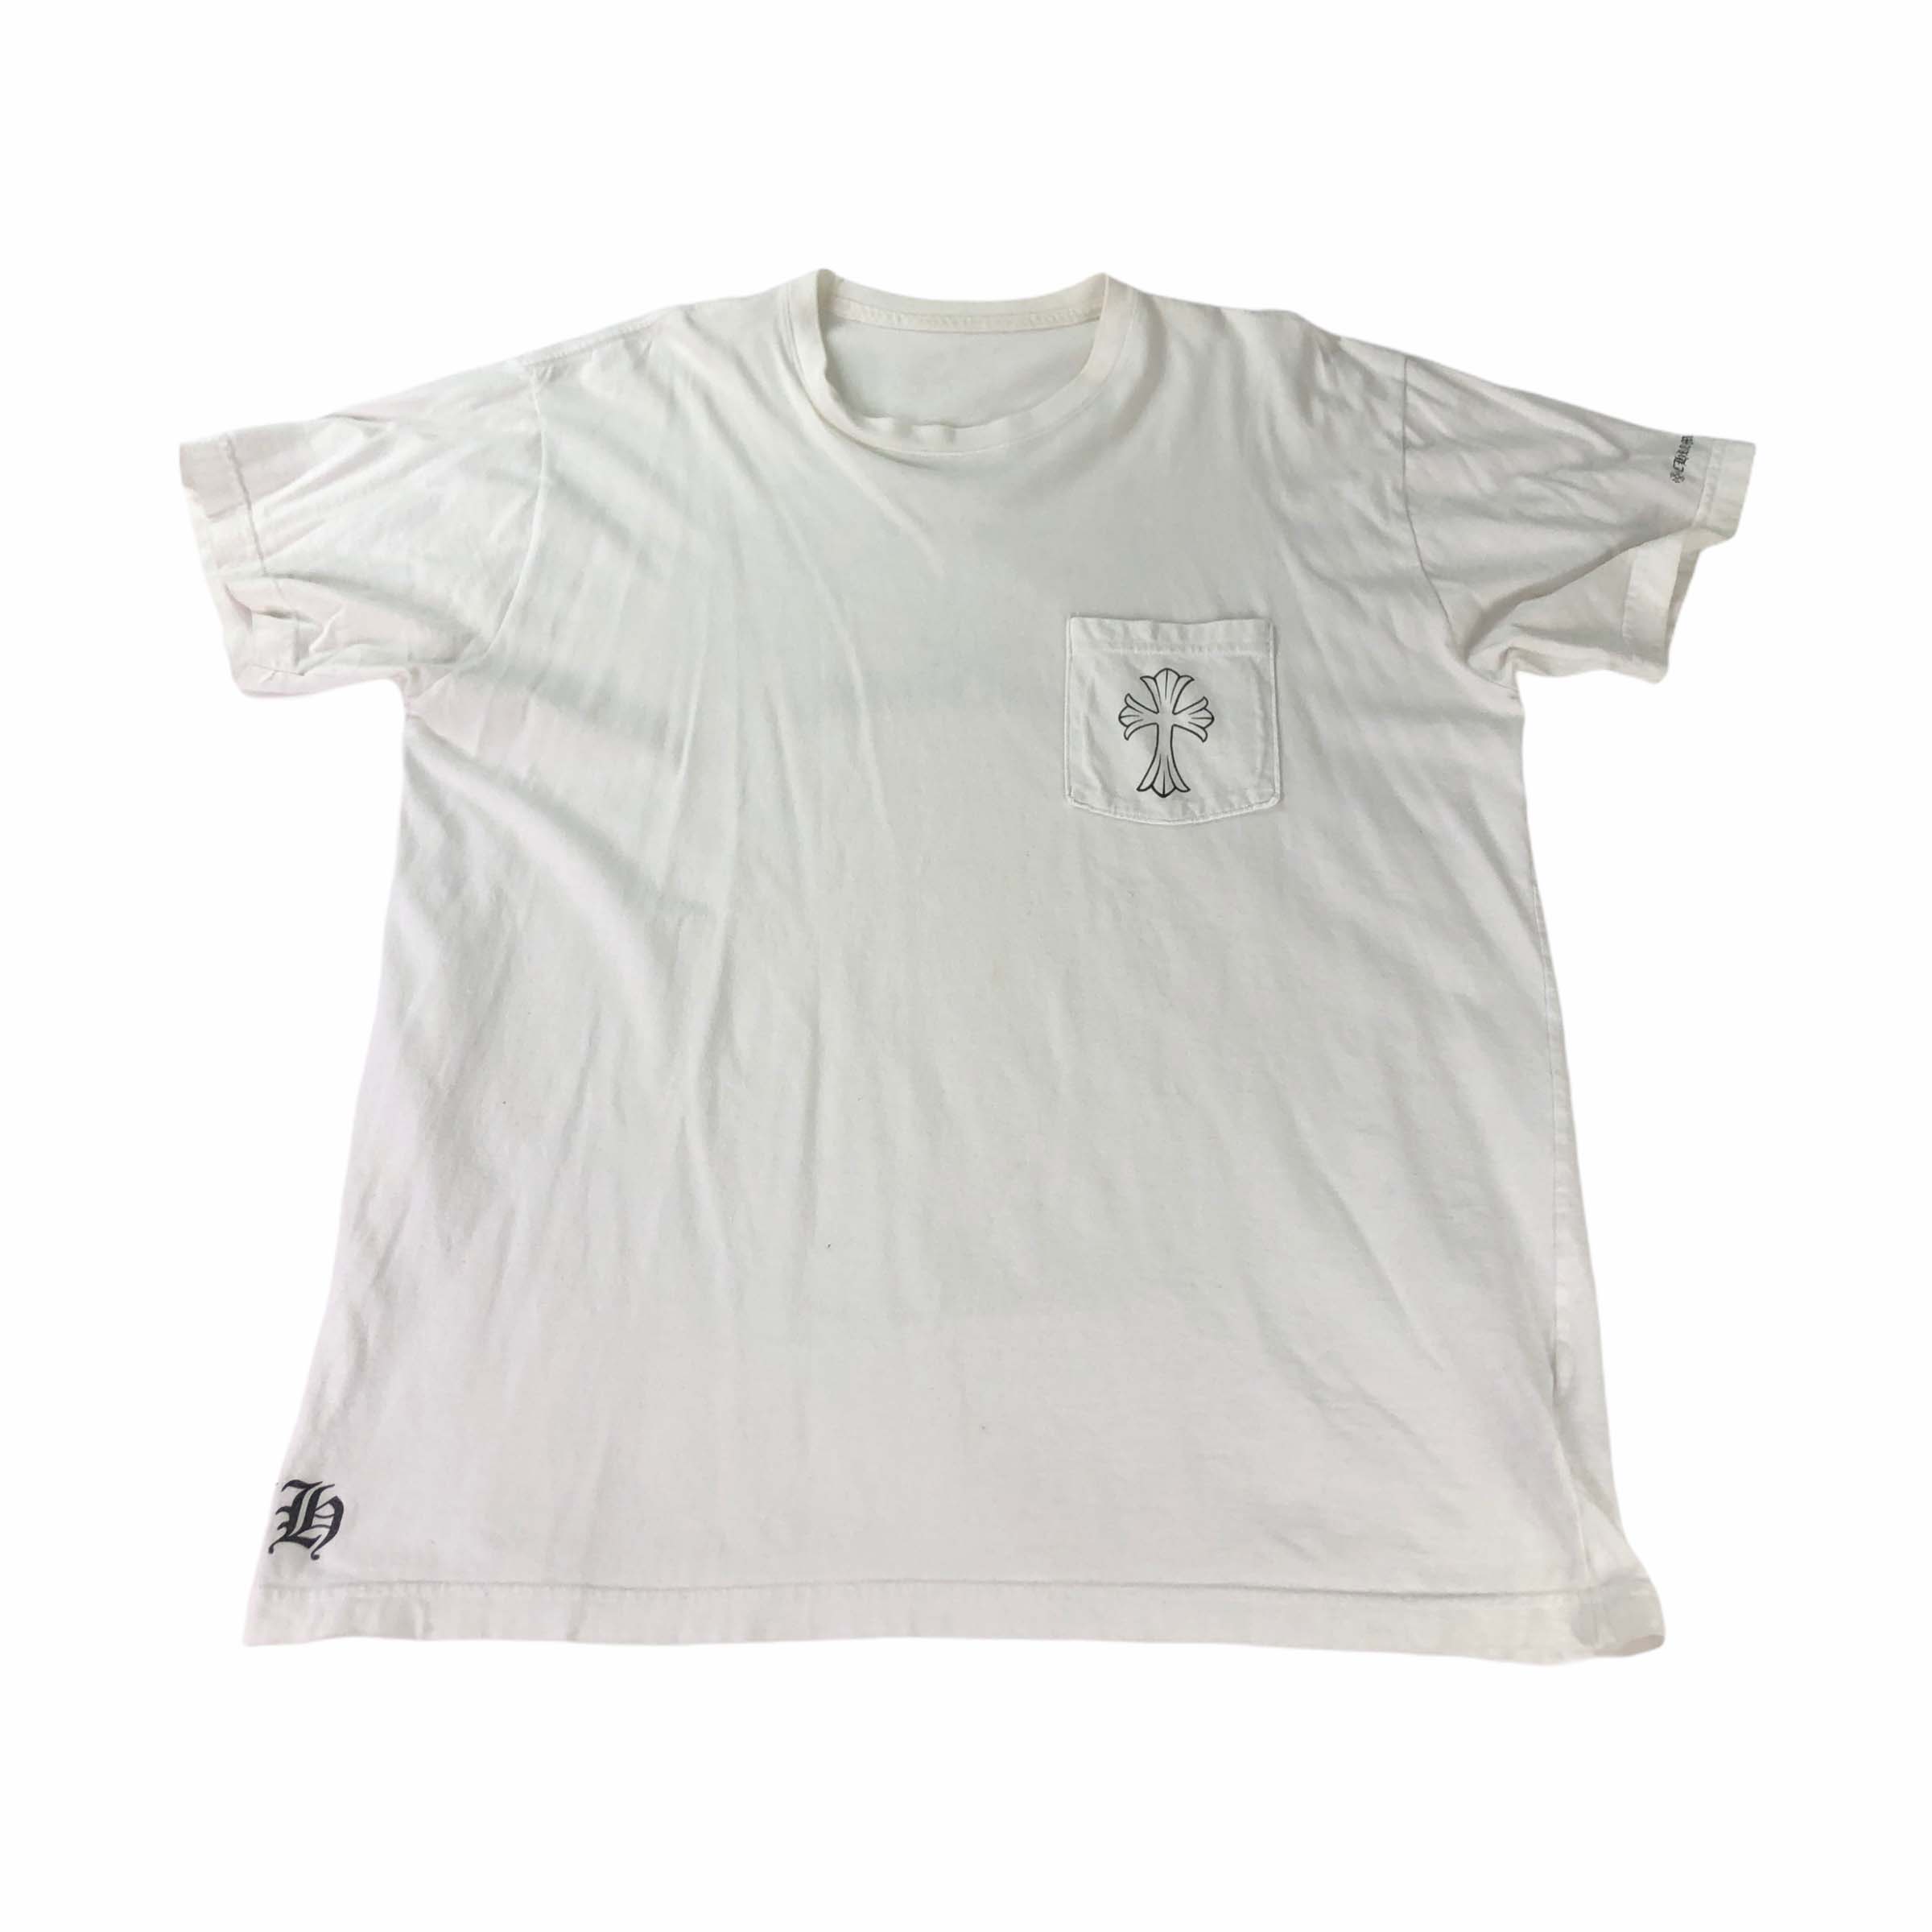 [Chrome Hearts] White Tshirt - Size XL